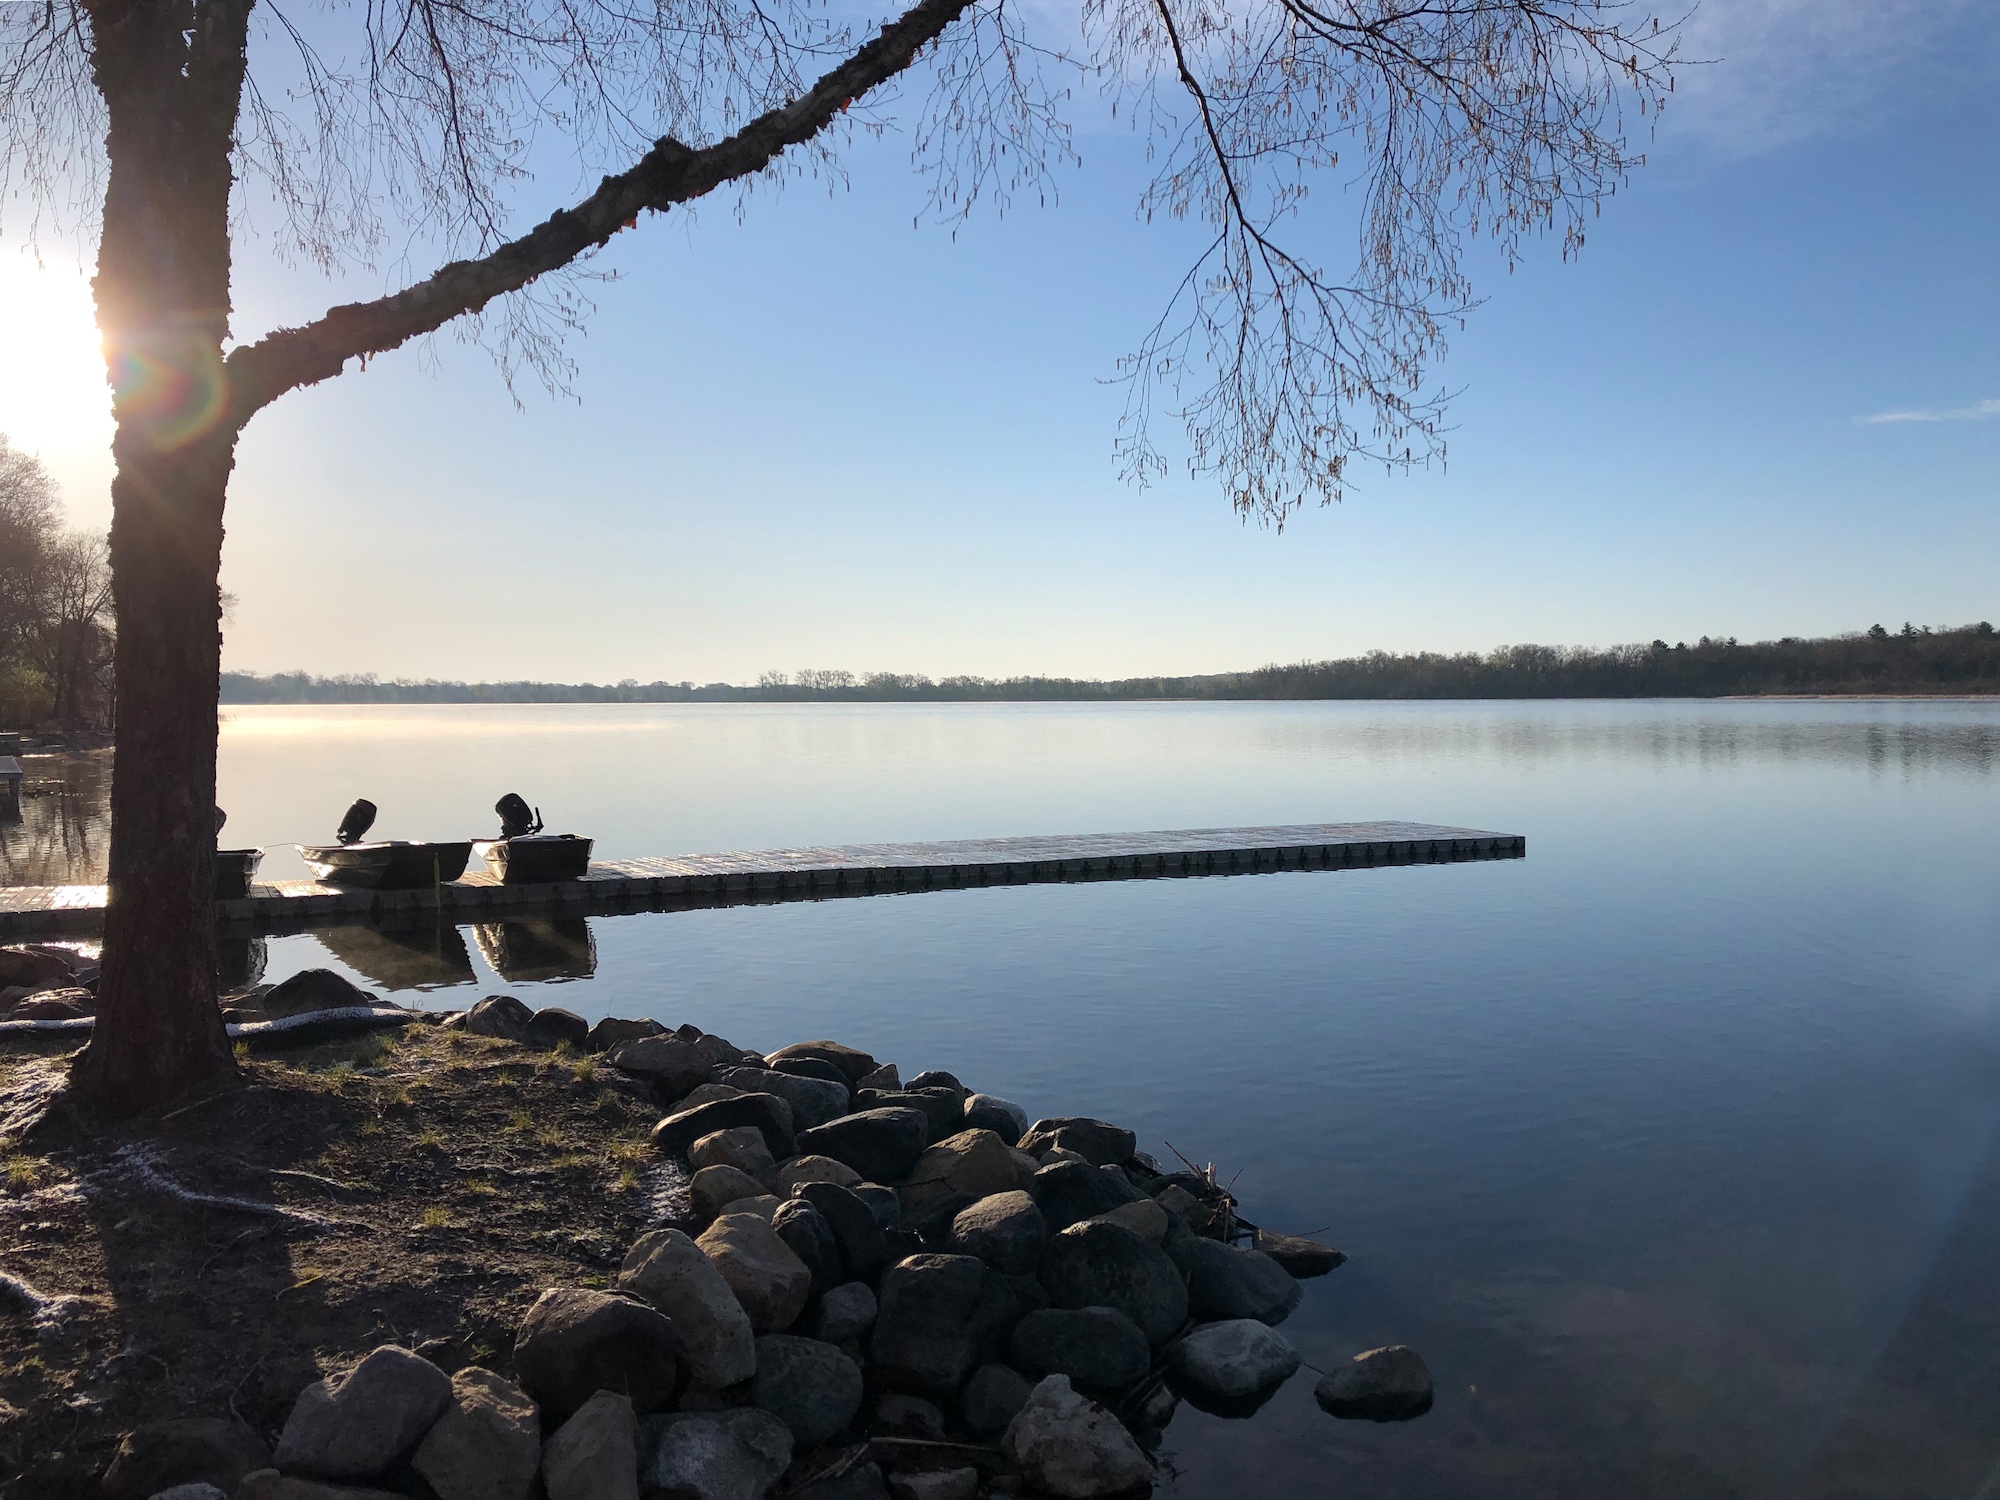 Lake Wingra on April 28, 2019.